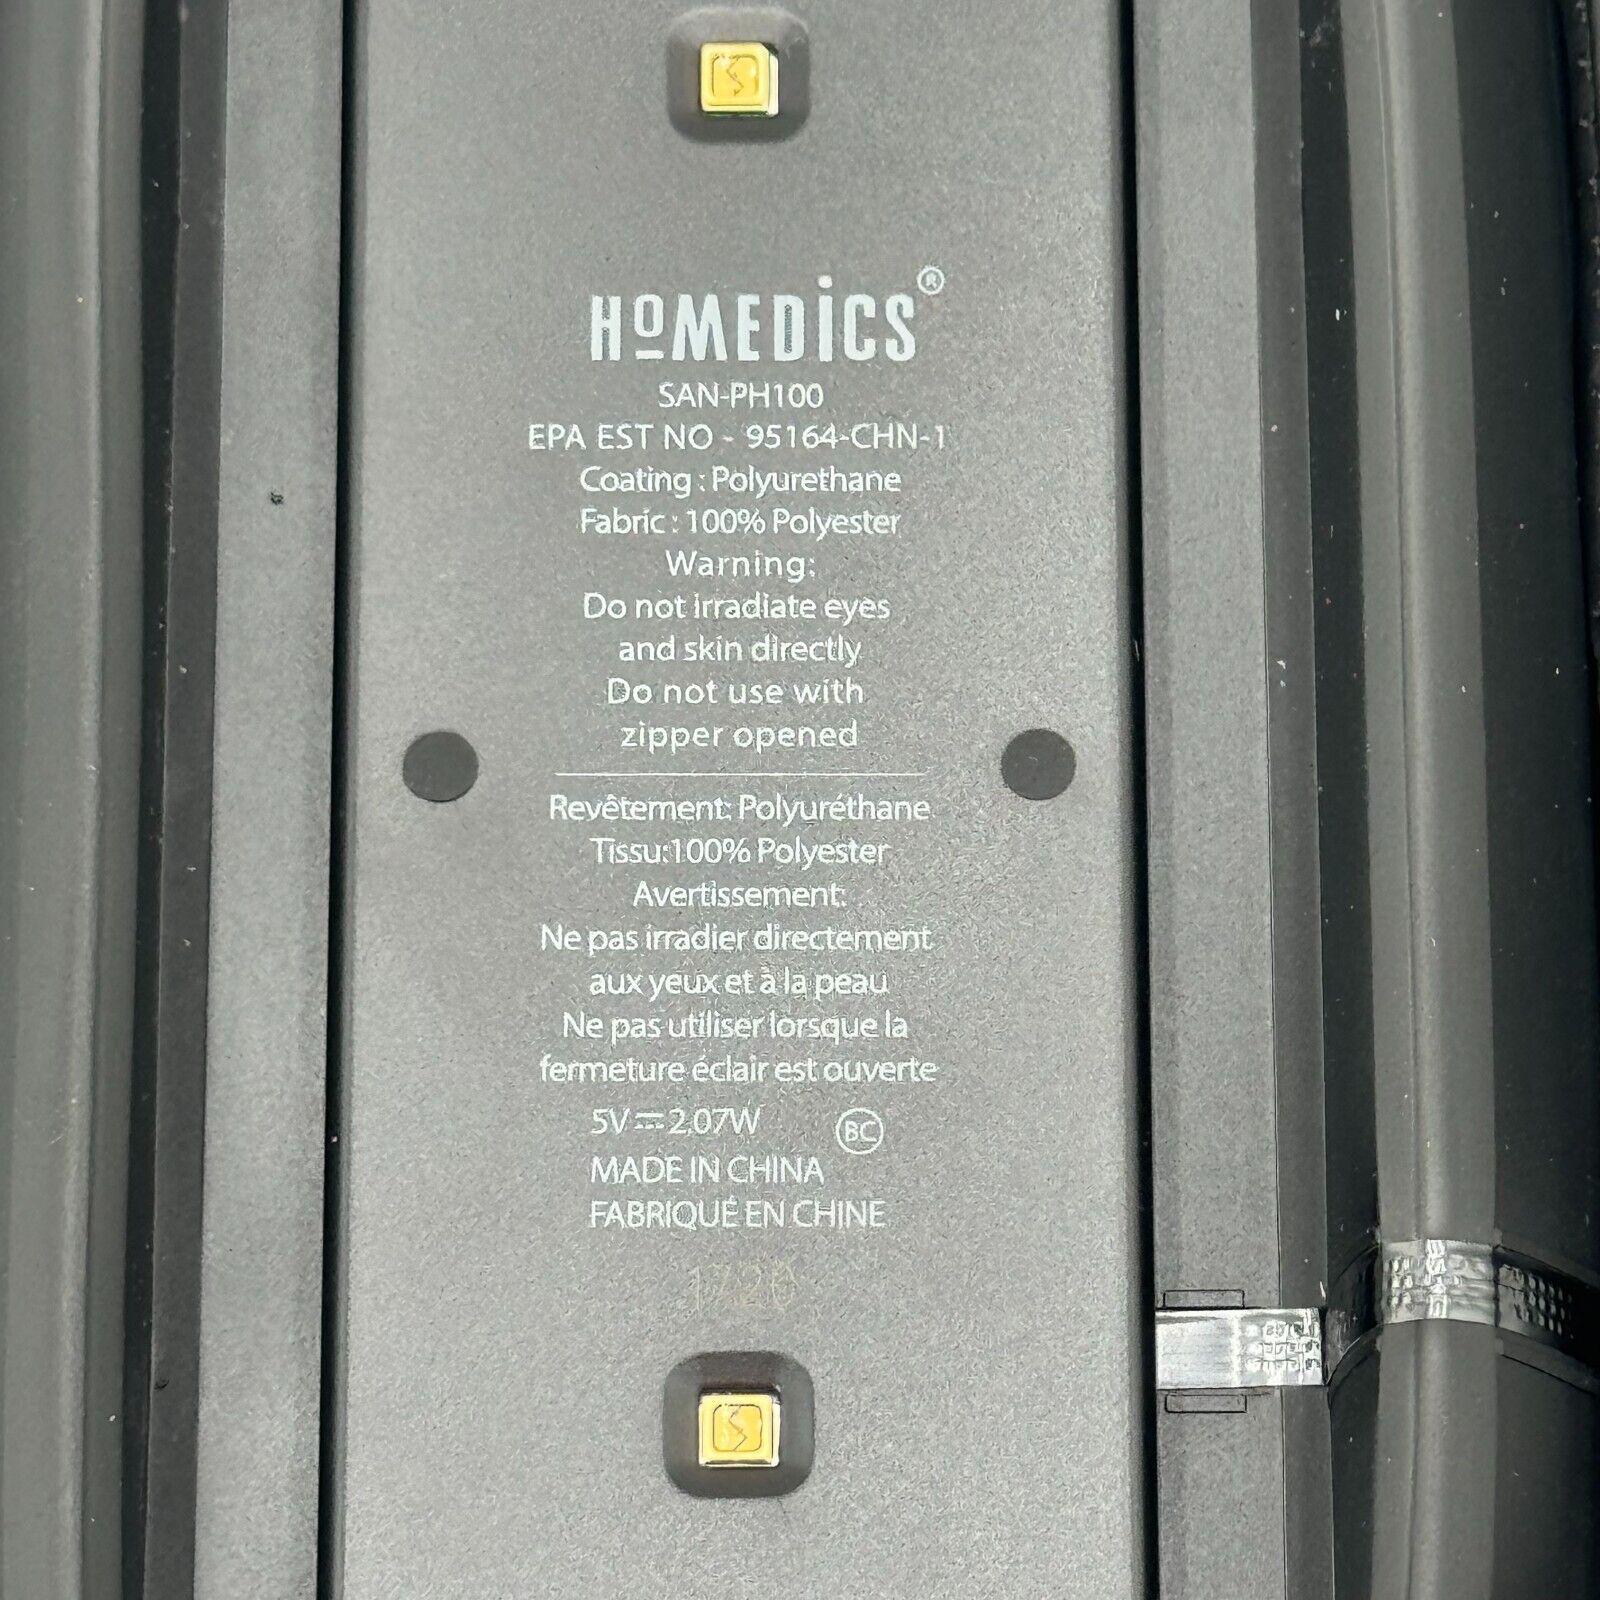 Homedics Wireless UV-Clean Phone Sanitizer - Kills up to 99.9% of Bacteria